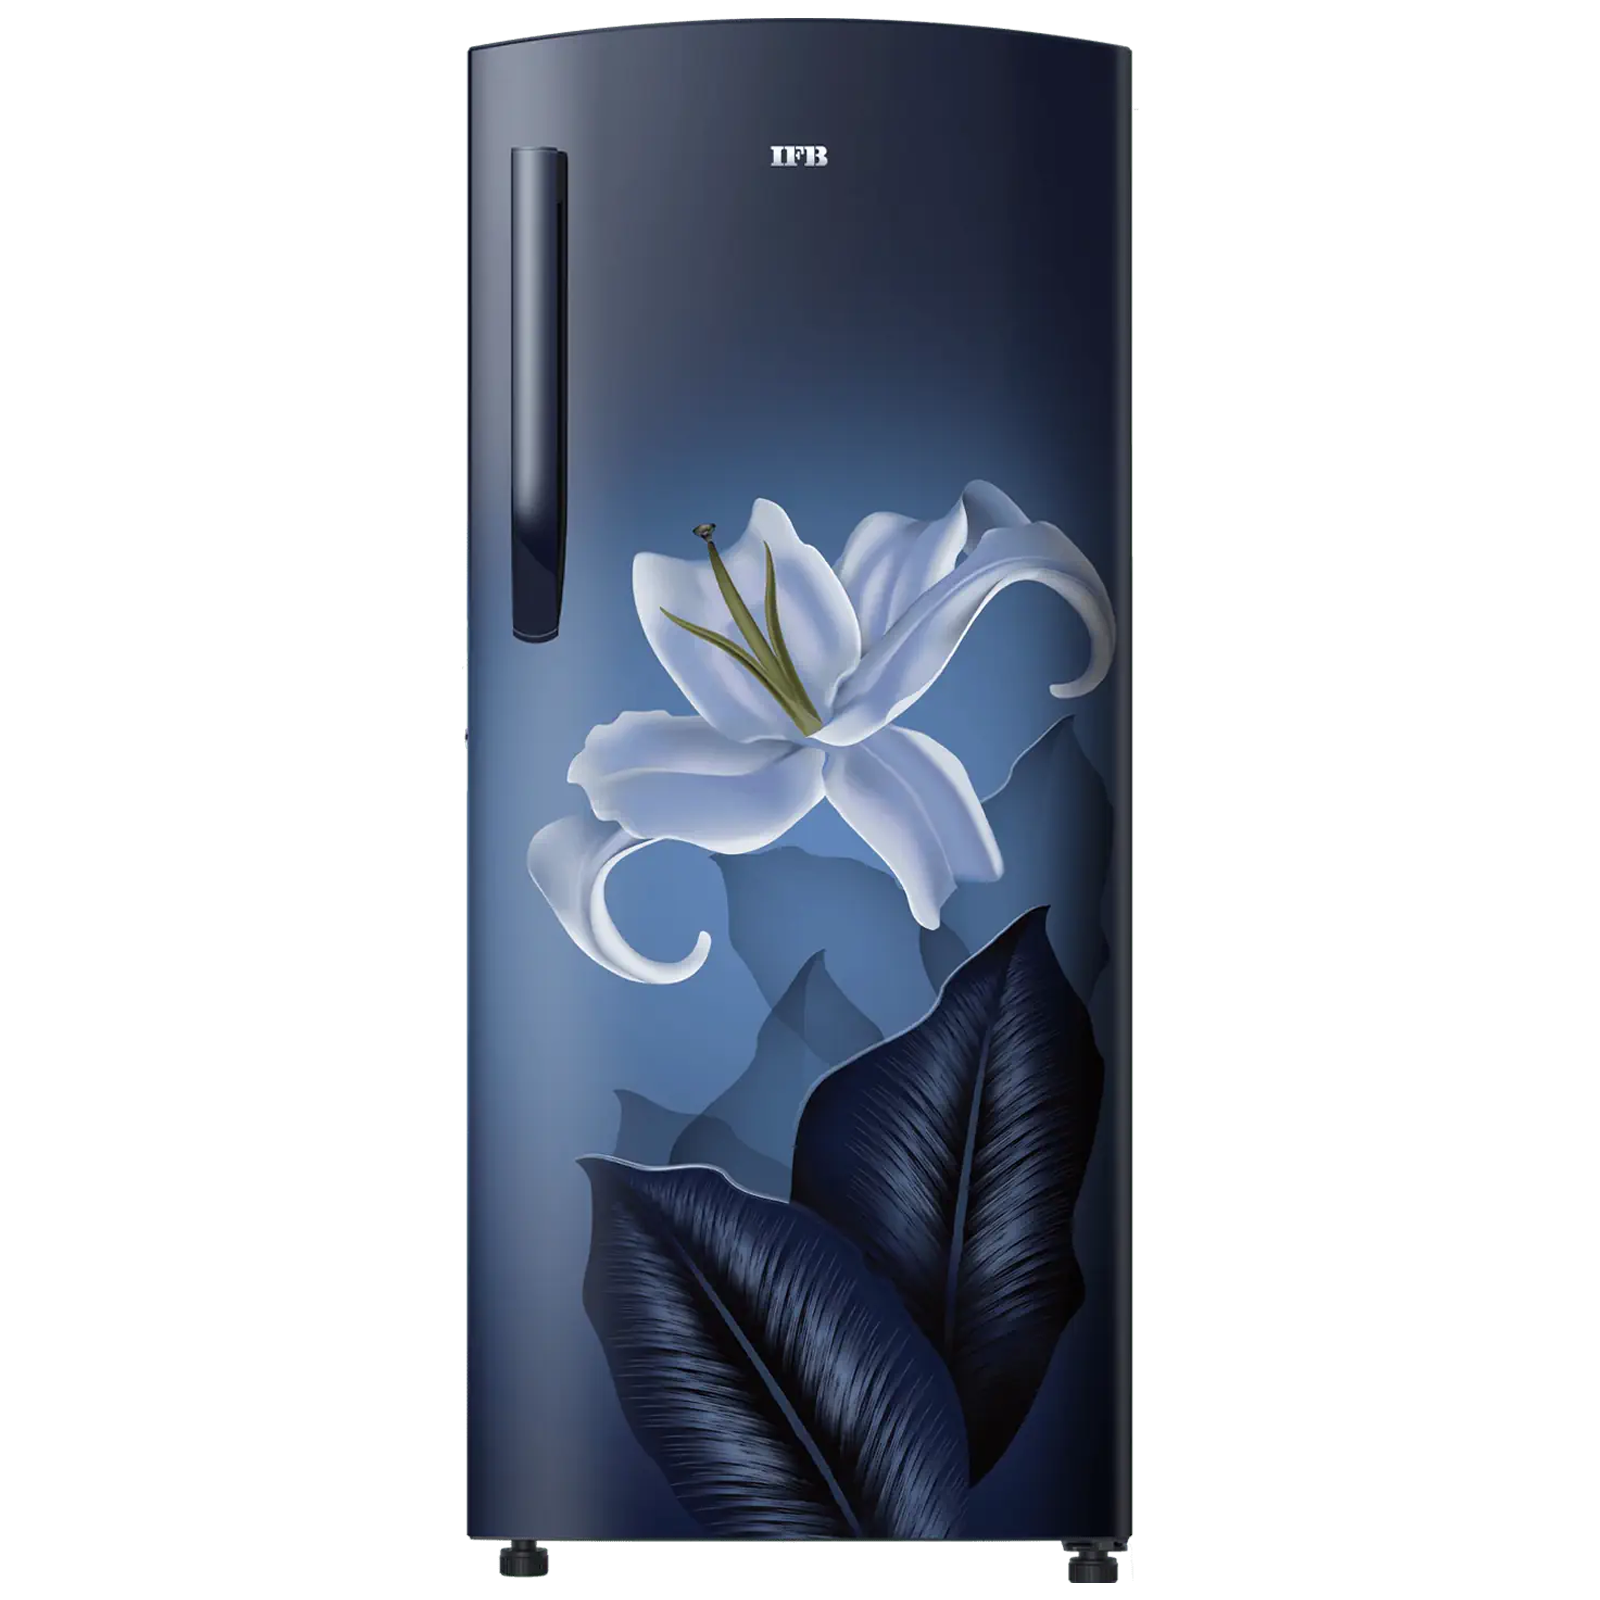 IFB Metal Cool 203 Litres 3 Star Direct Cool Single Door Refrigerator with Antibacterial Gasket (IFBDC2233FBB, Blue Flower)